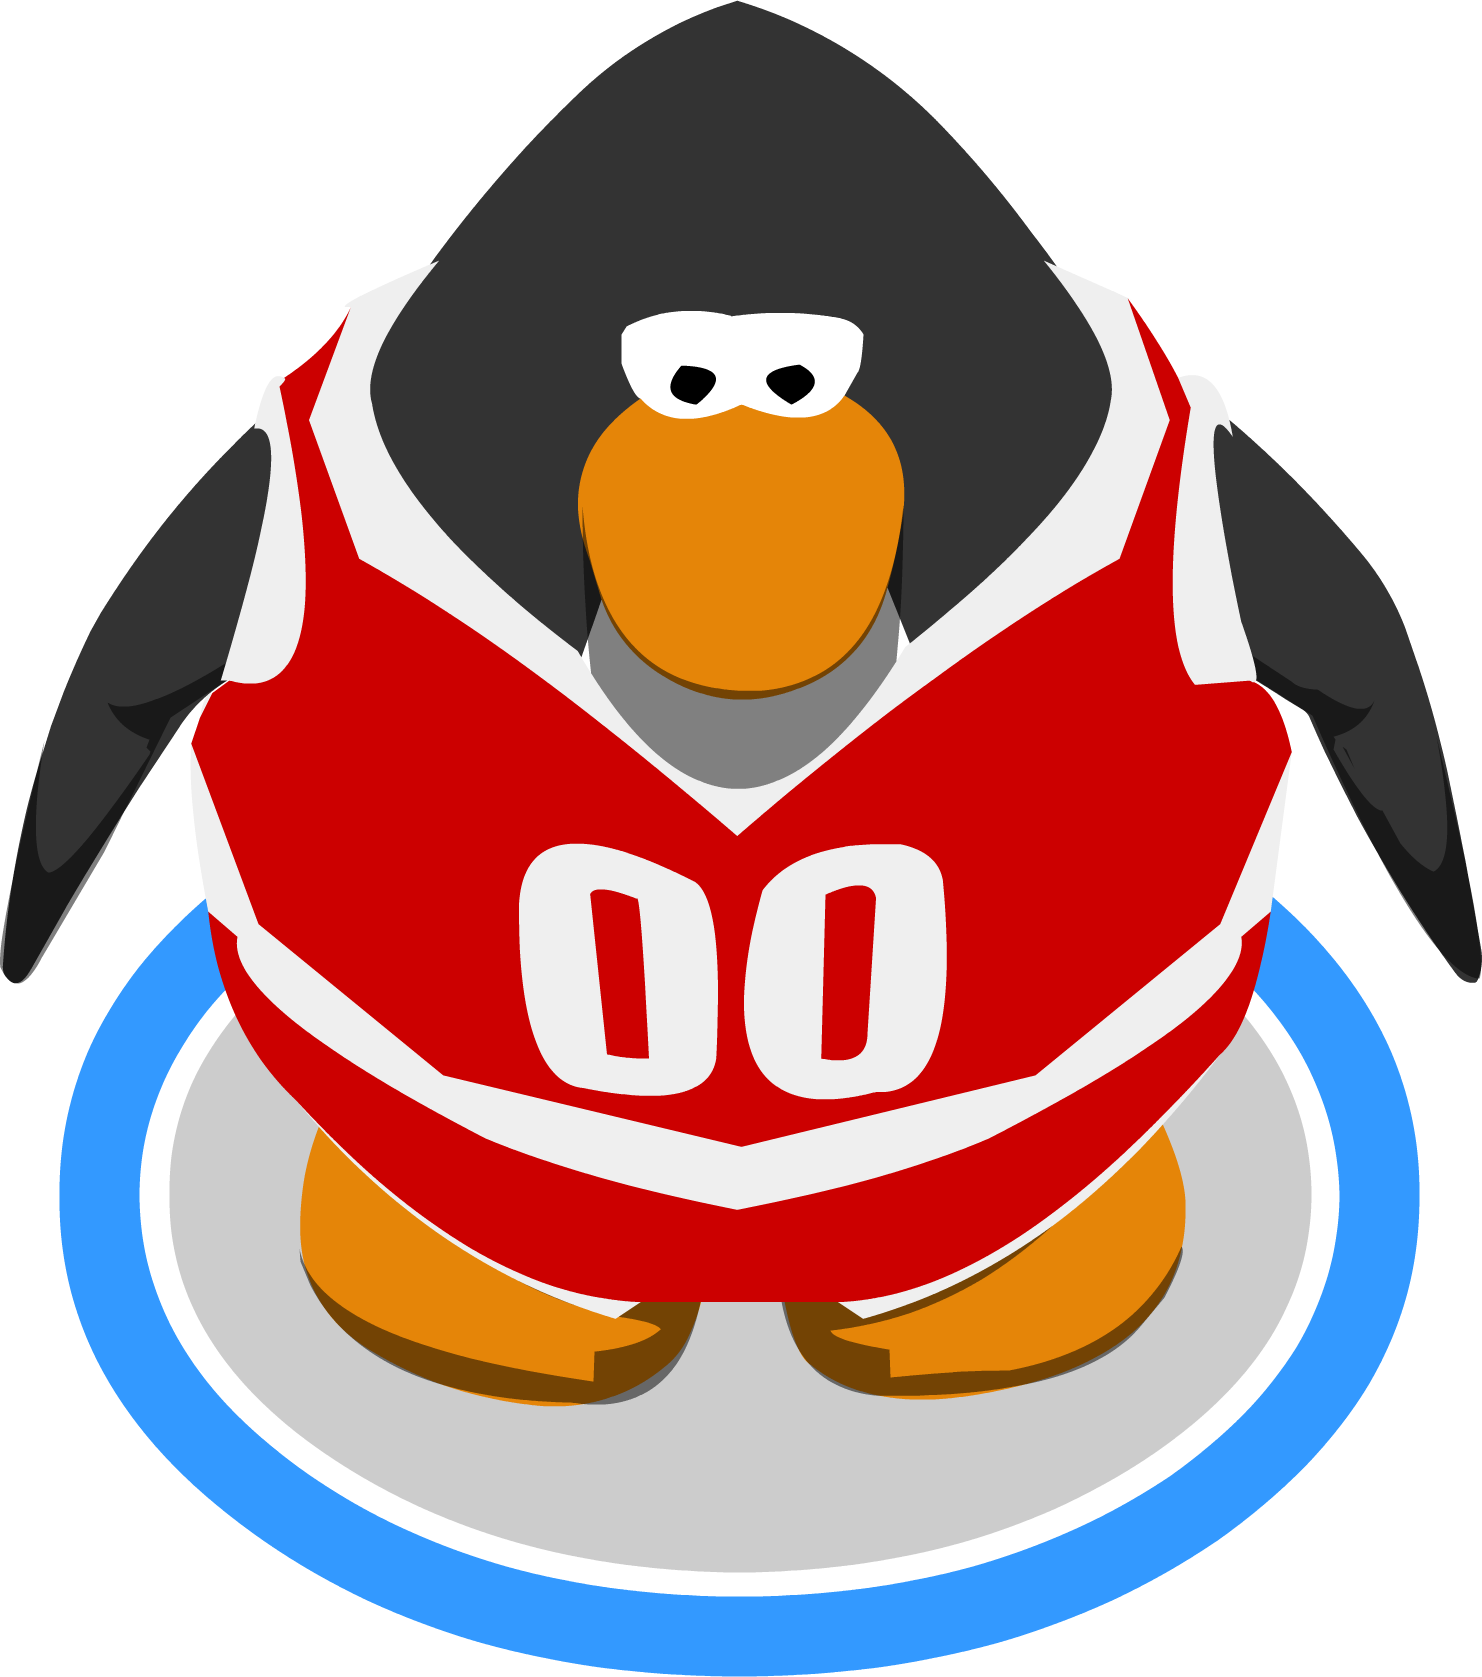 Red Basketball Jersey | Club Penguin Wiki | Fandom powered by Wikia